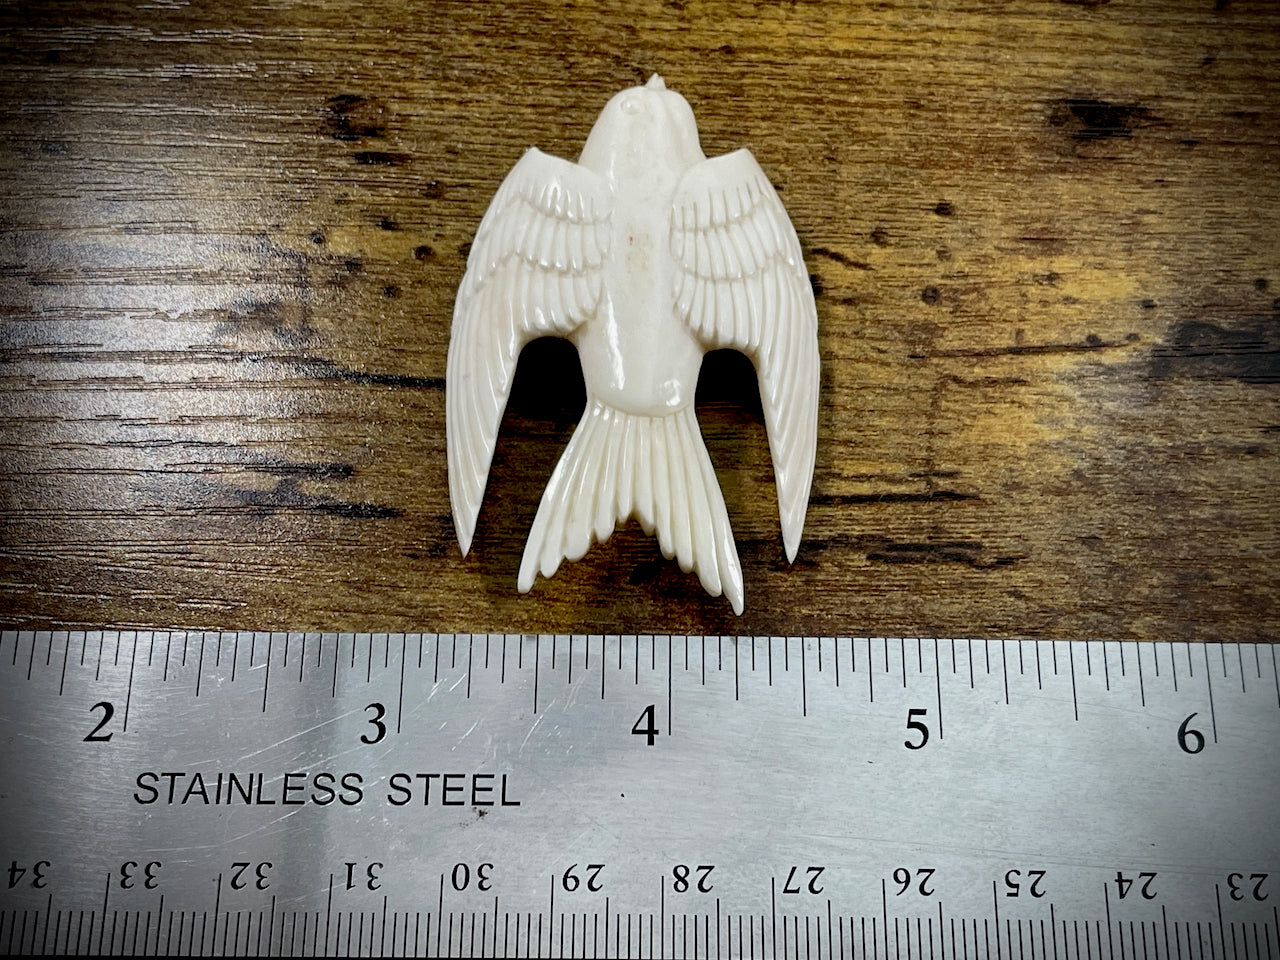 Hand-Carved Bone Swift/Swallow Pendant